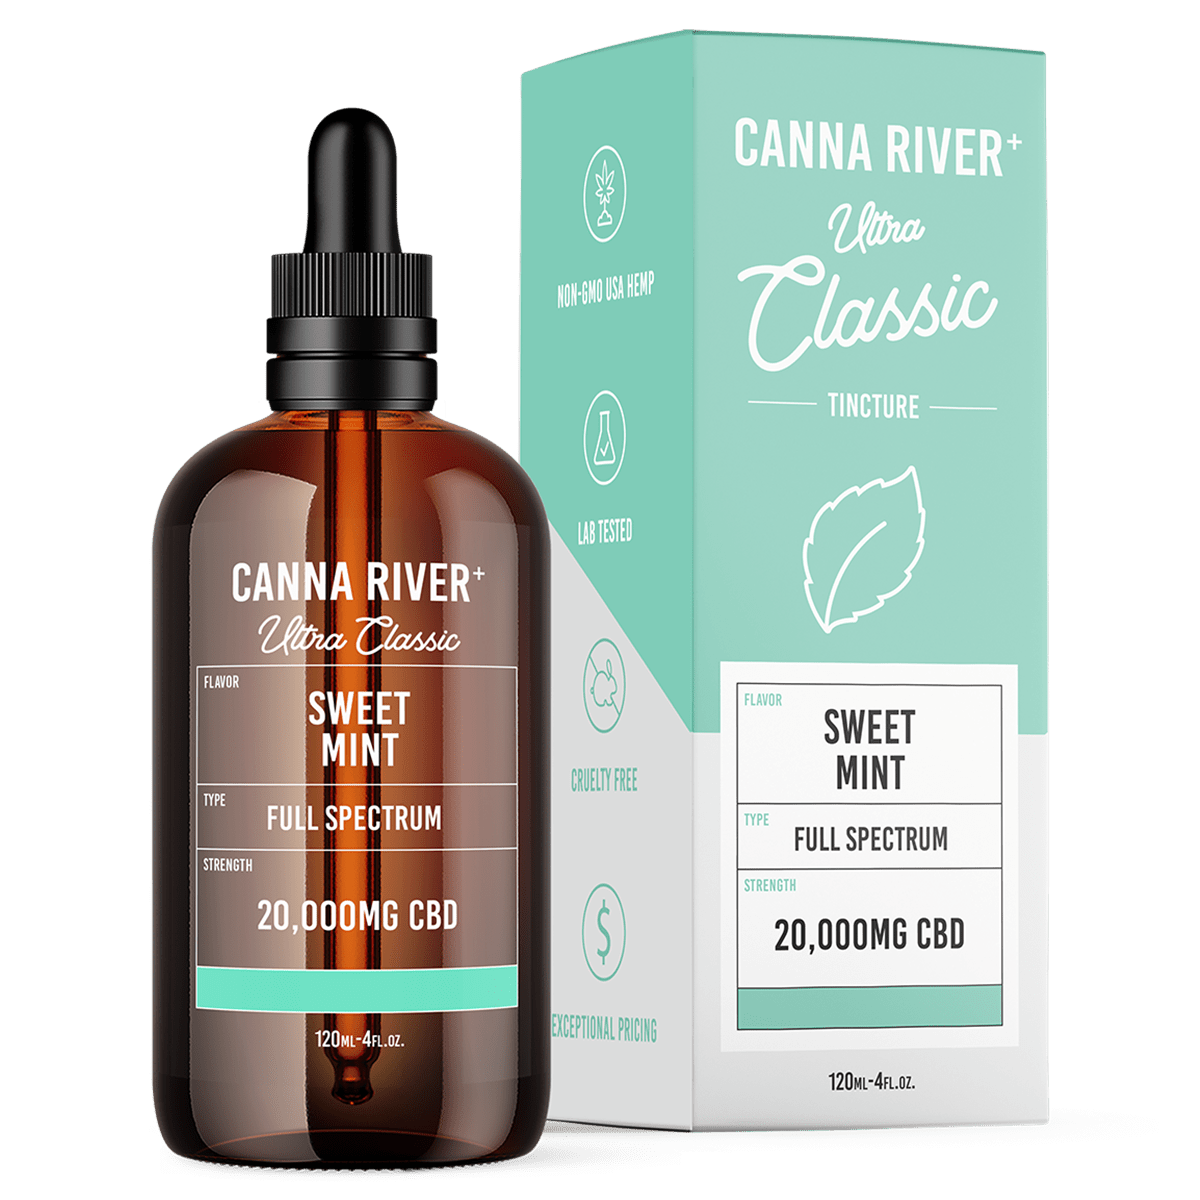 Canna River - Full Spectrum CBD Ultra Classic Tincture - Sweet Mint - 120mL